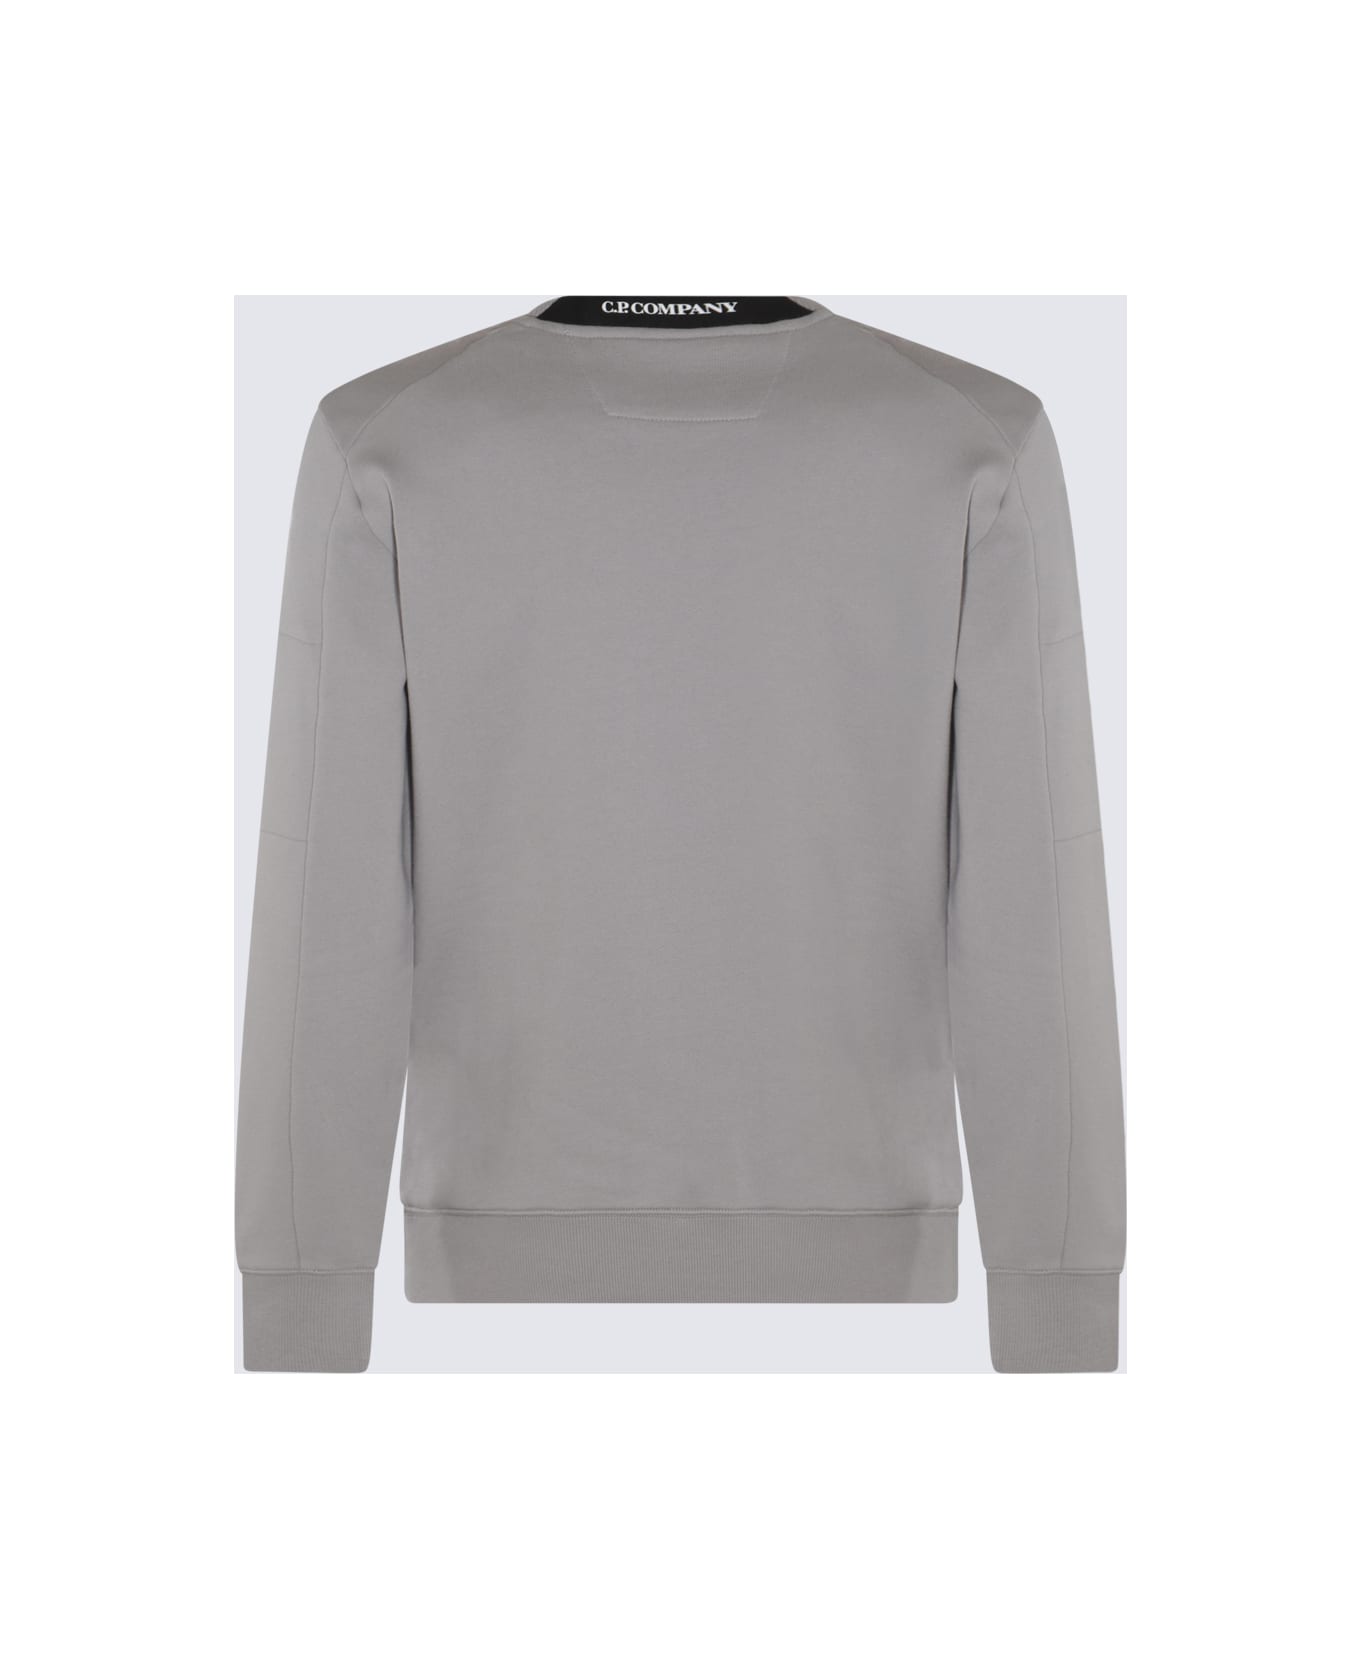 C.P. Company Grey Cotton Sweatshirt